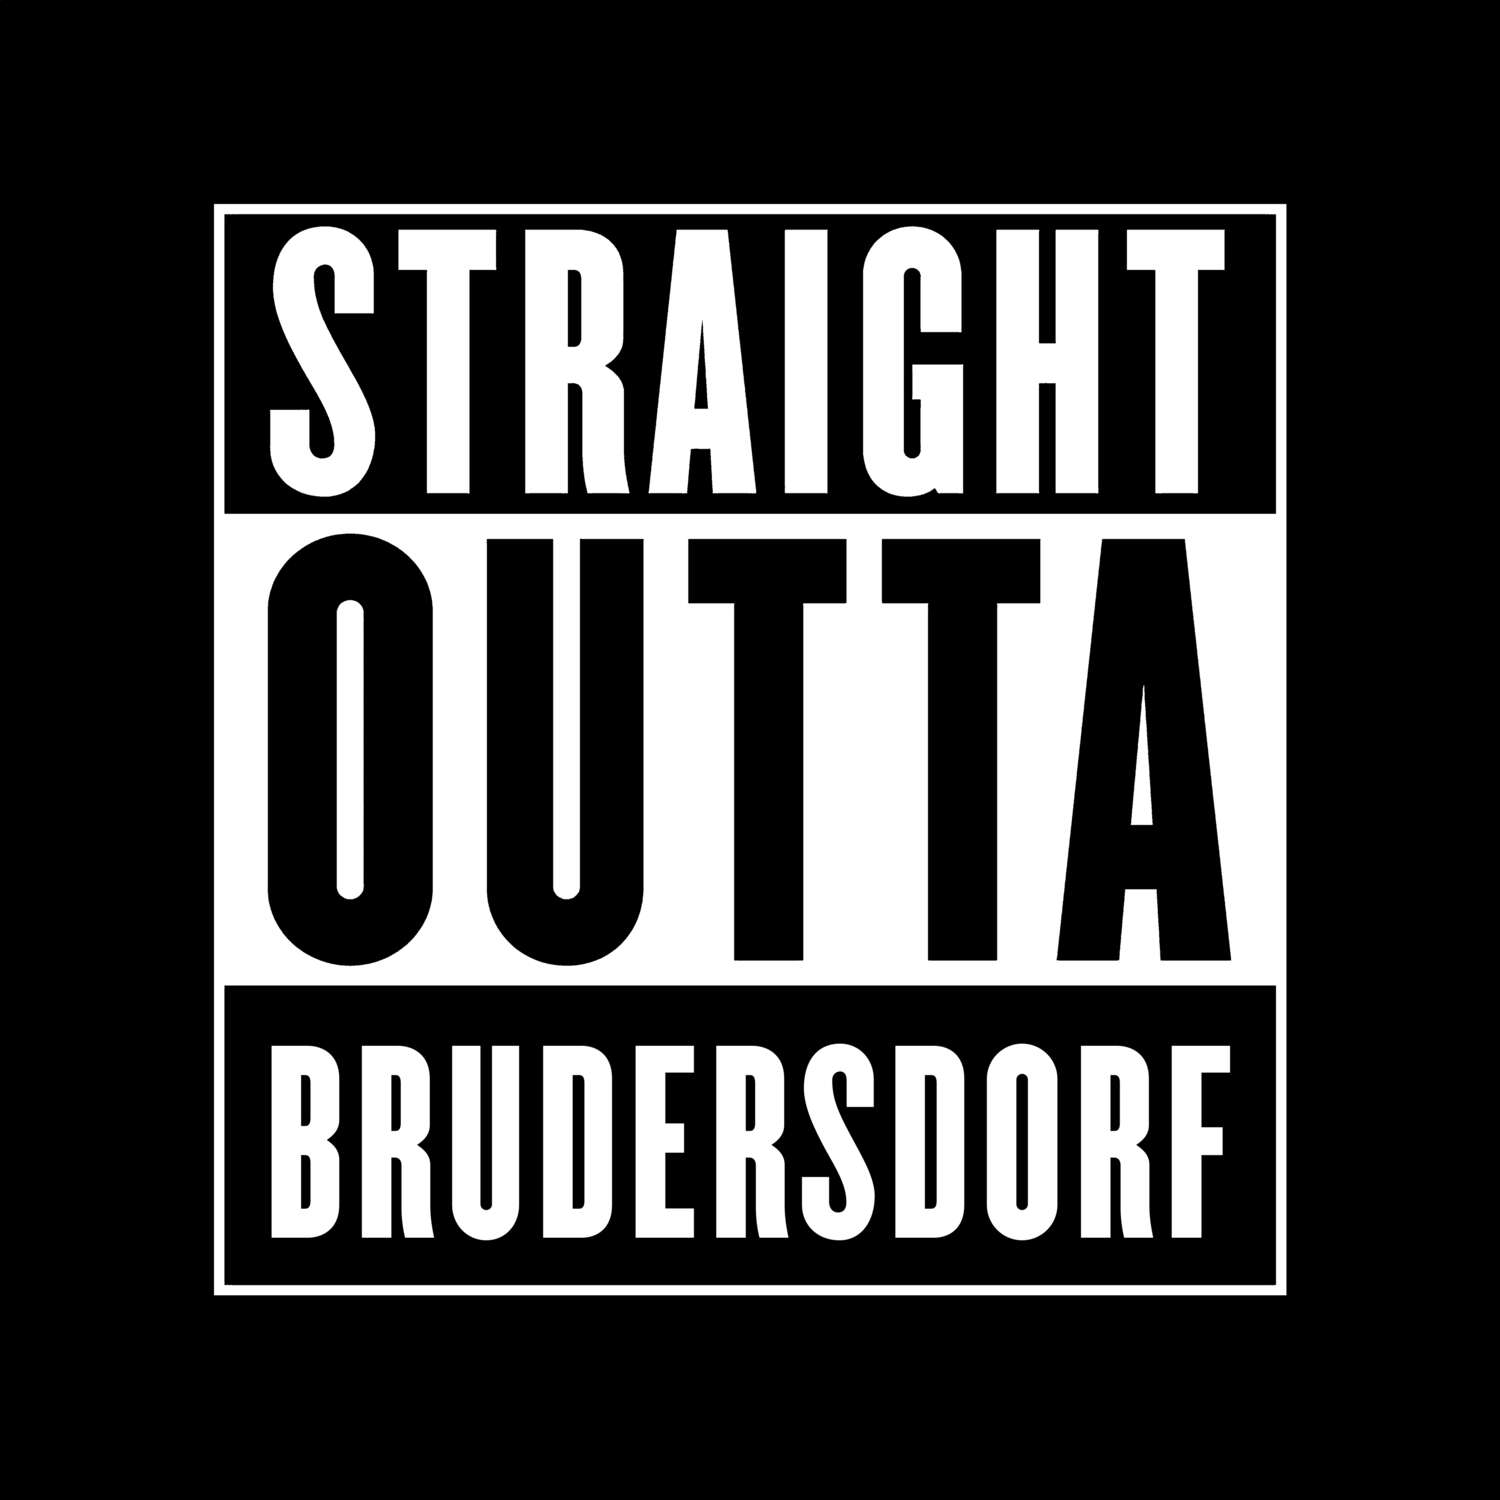 Brudersdorf T-Shirt »Straight Outta«